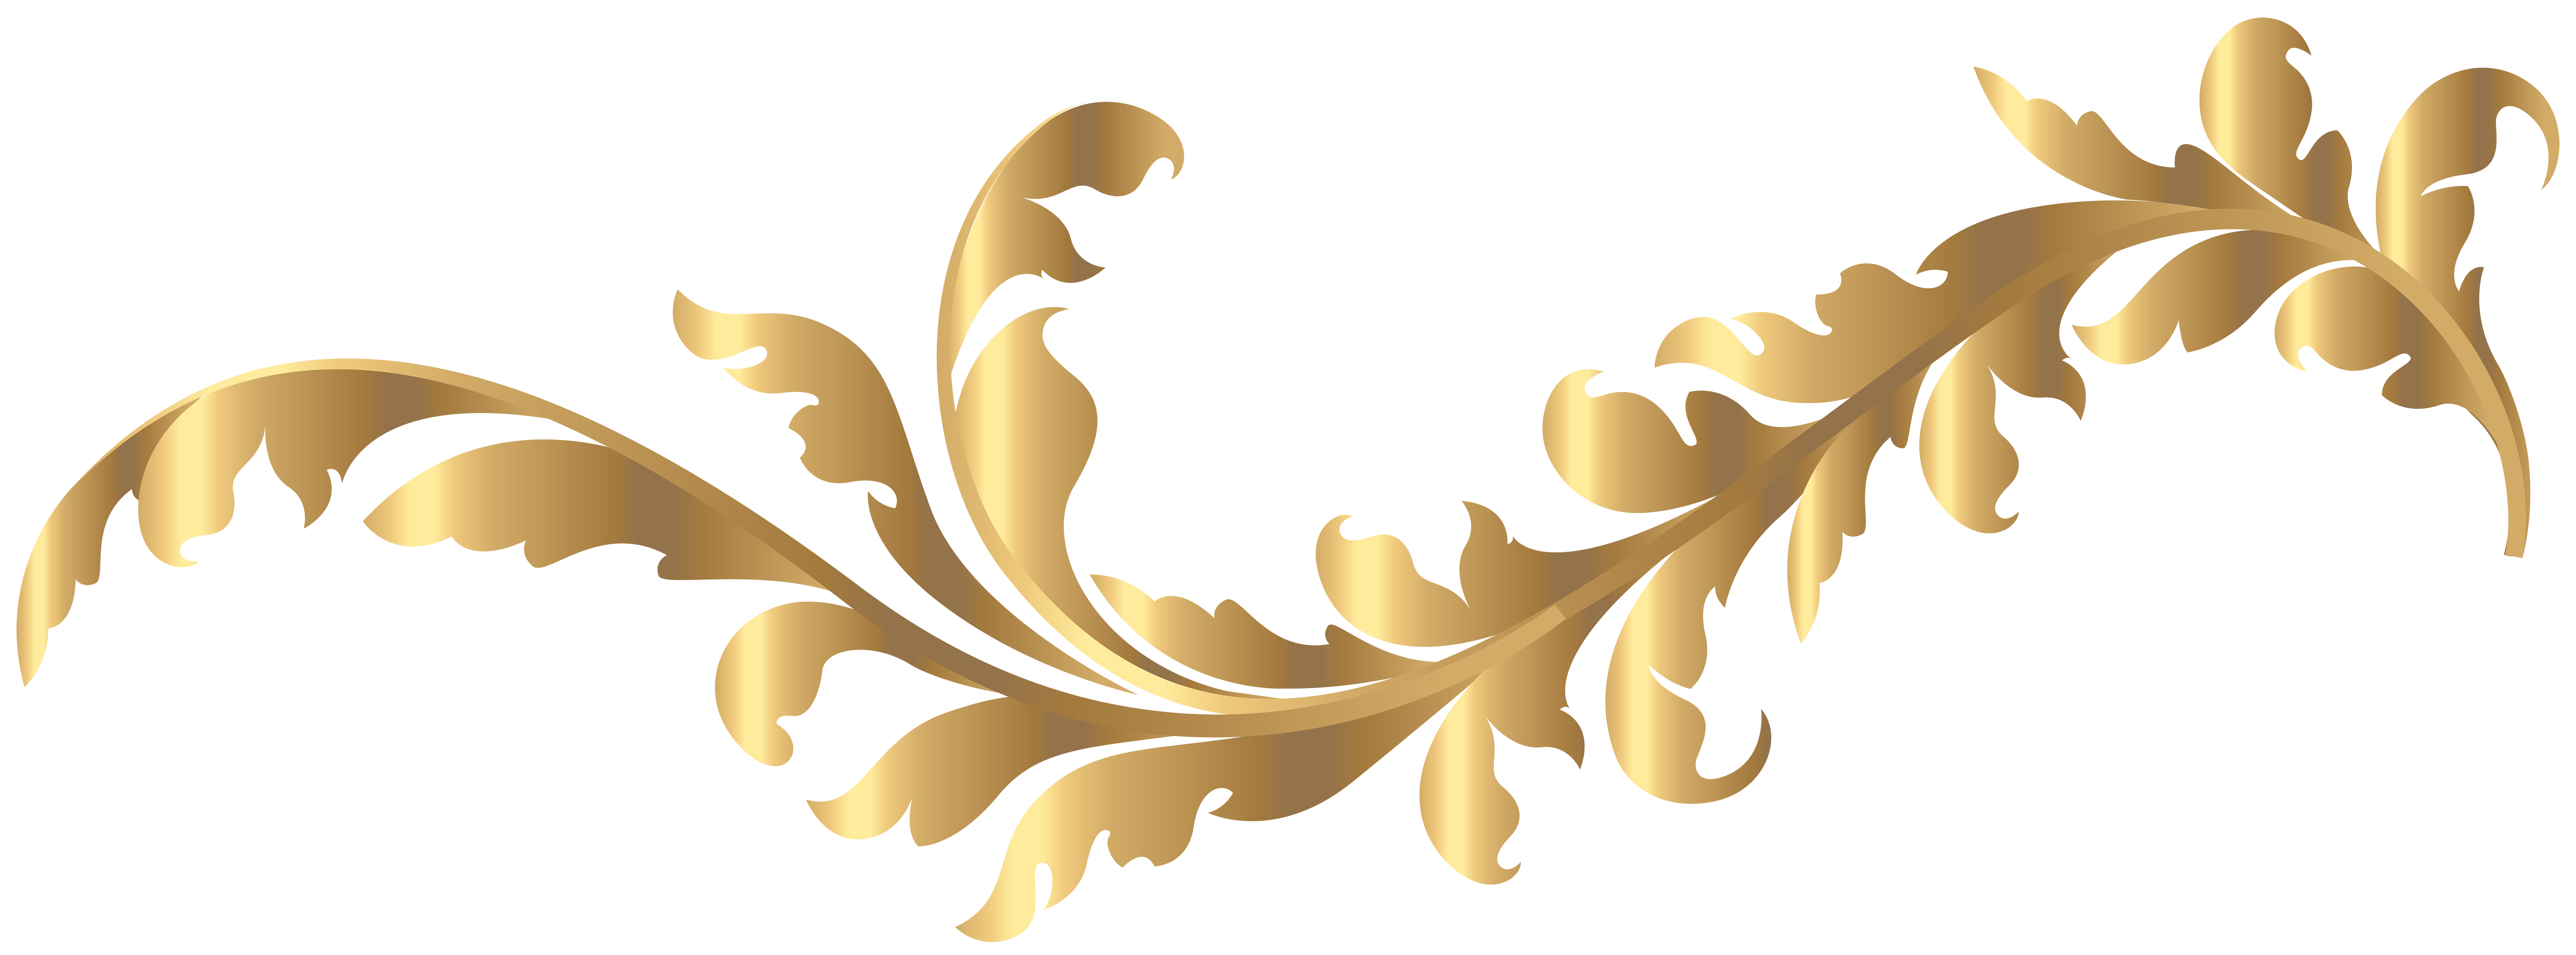 Floral Gold Element PNG Clip Art Image.